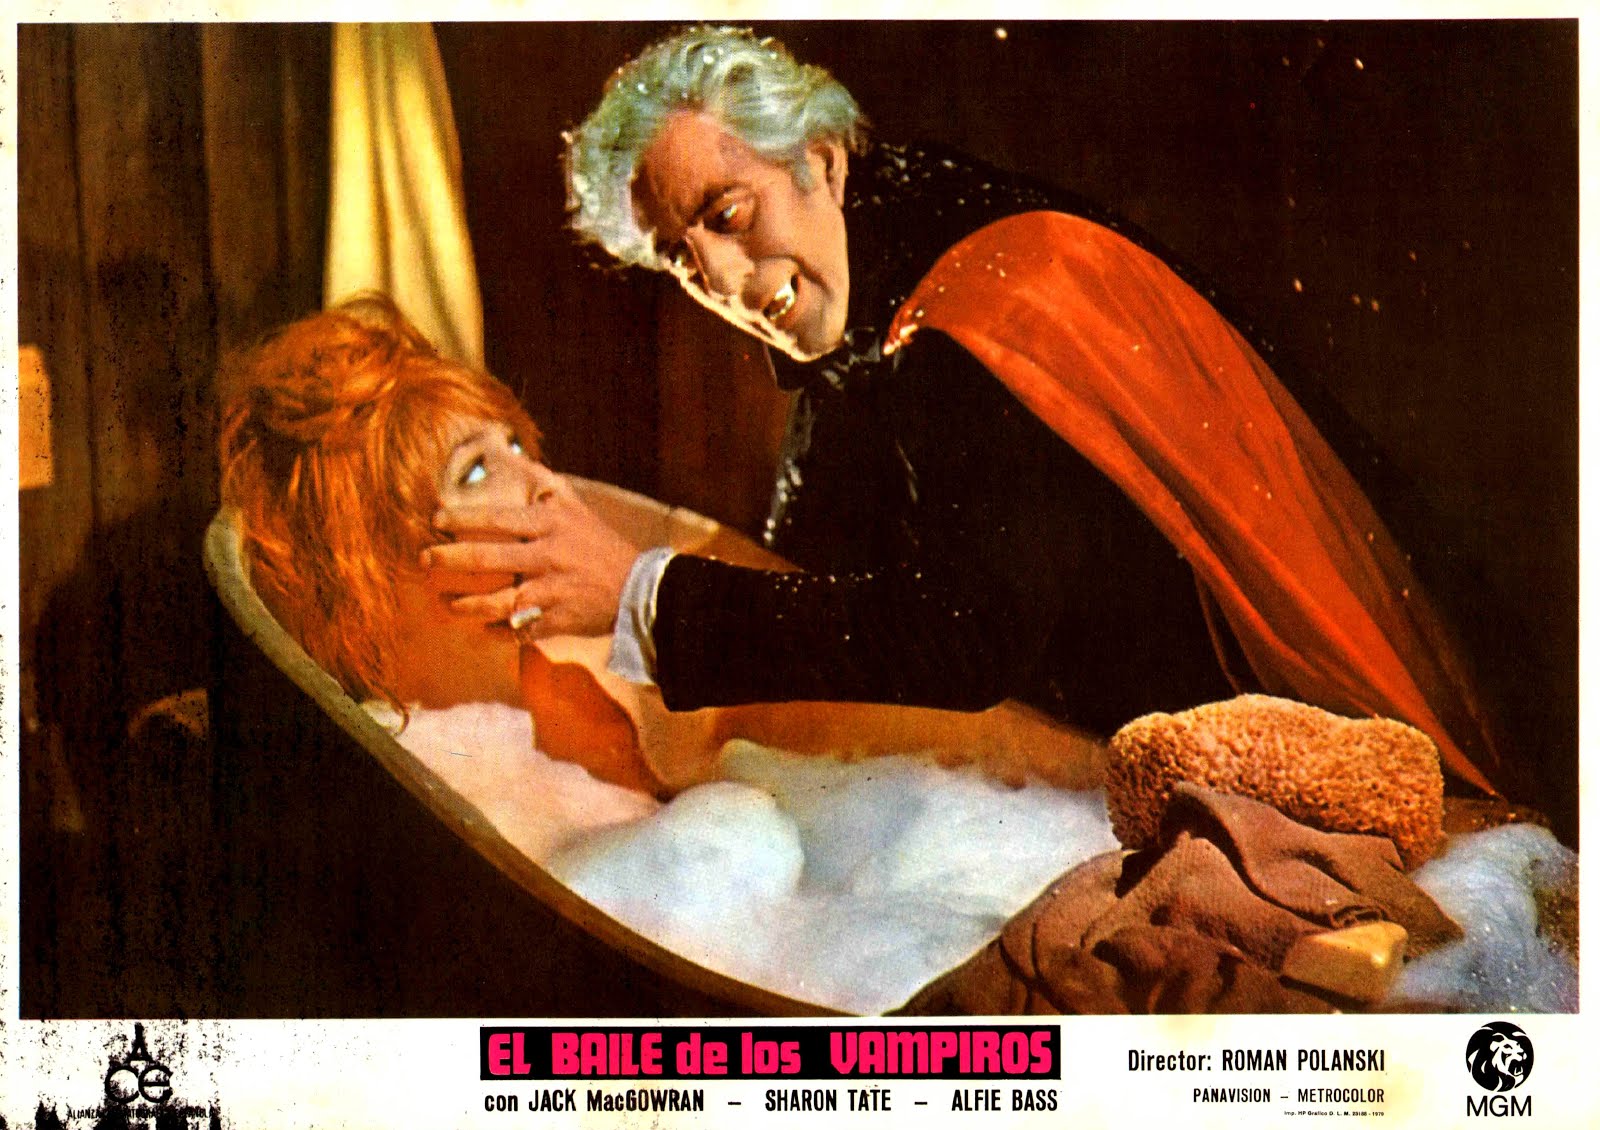 Le bal des vampires (1966) Roman Polanski - The fearless vampire killers (23.02.1966 / 07.1966)